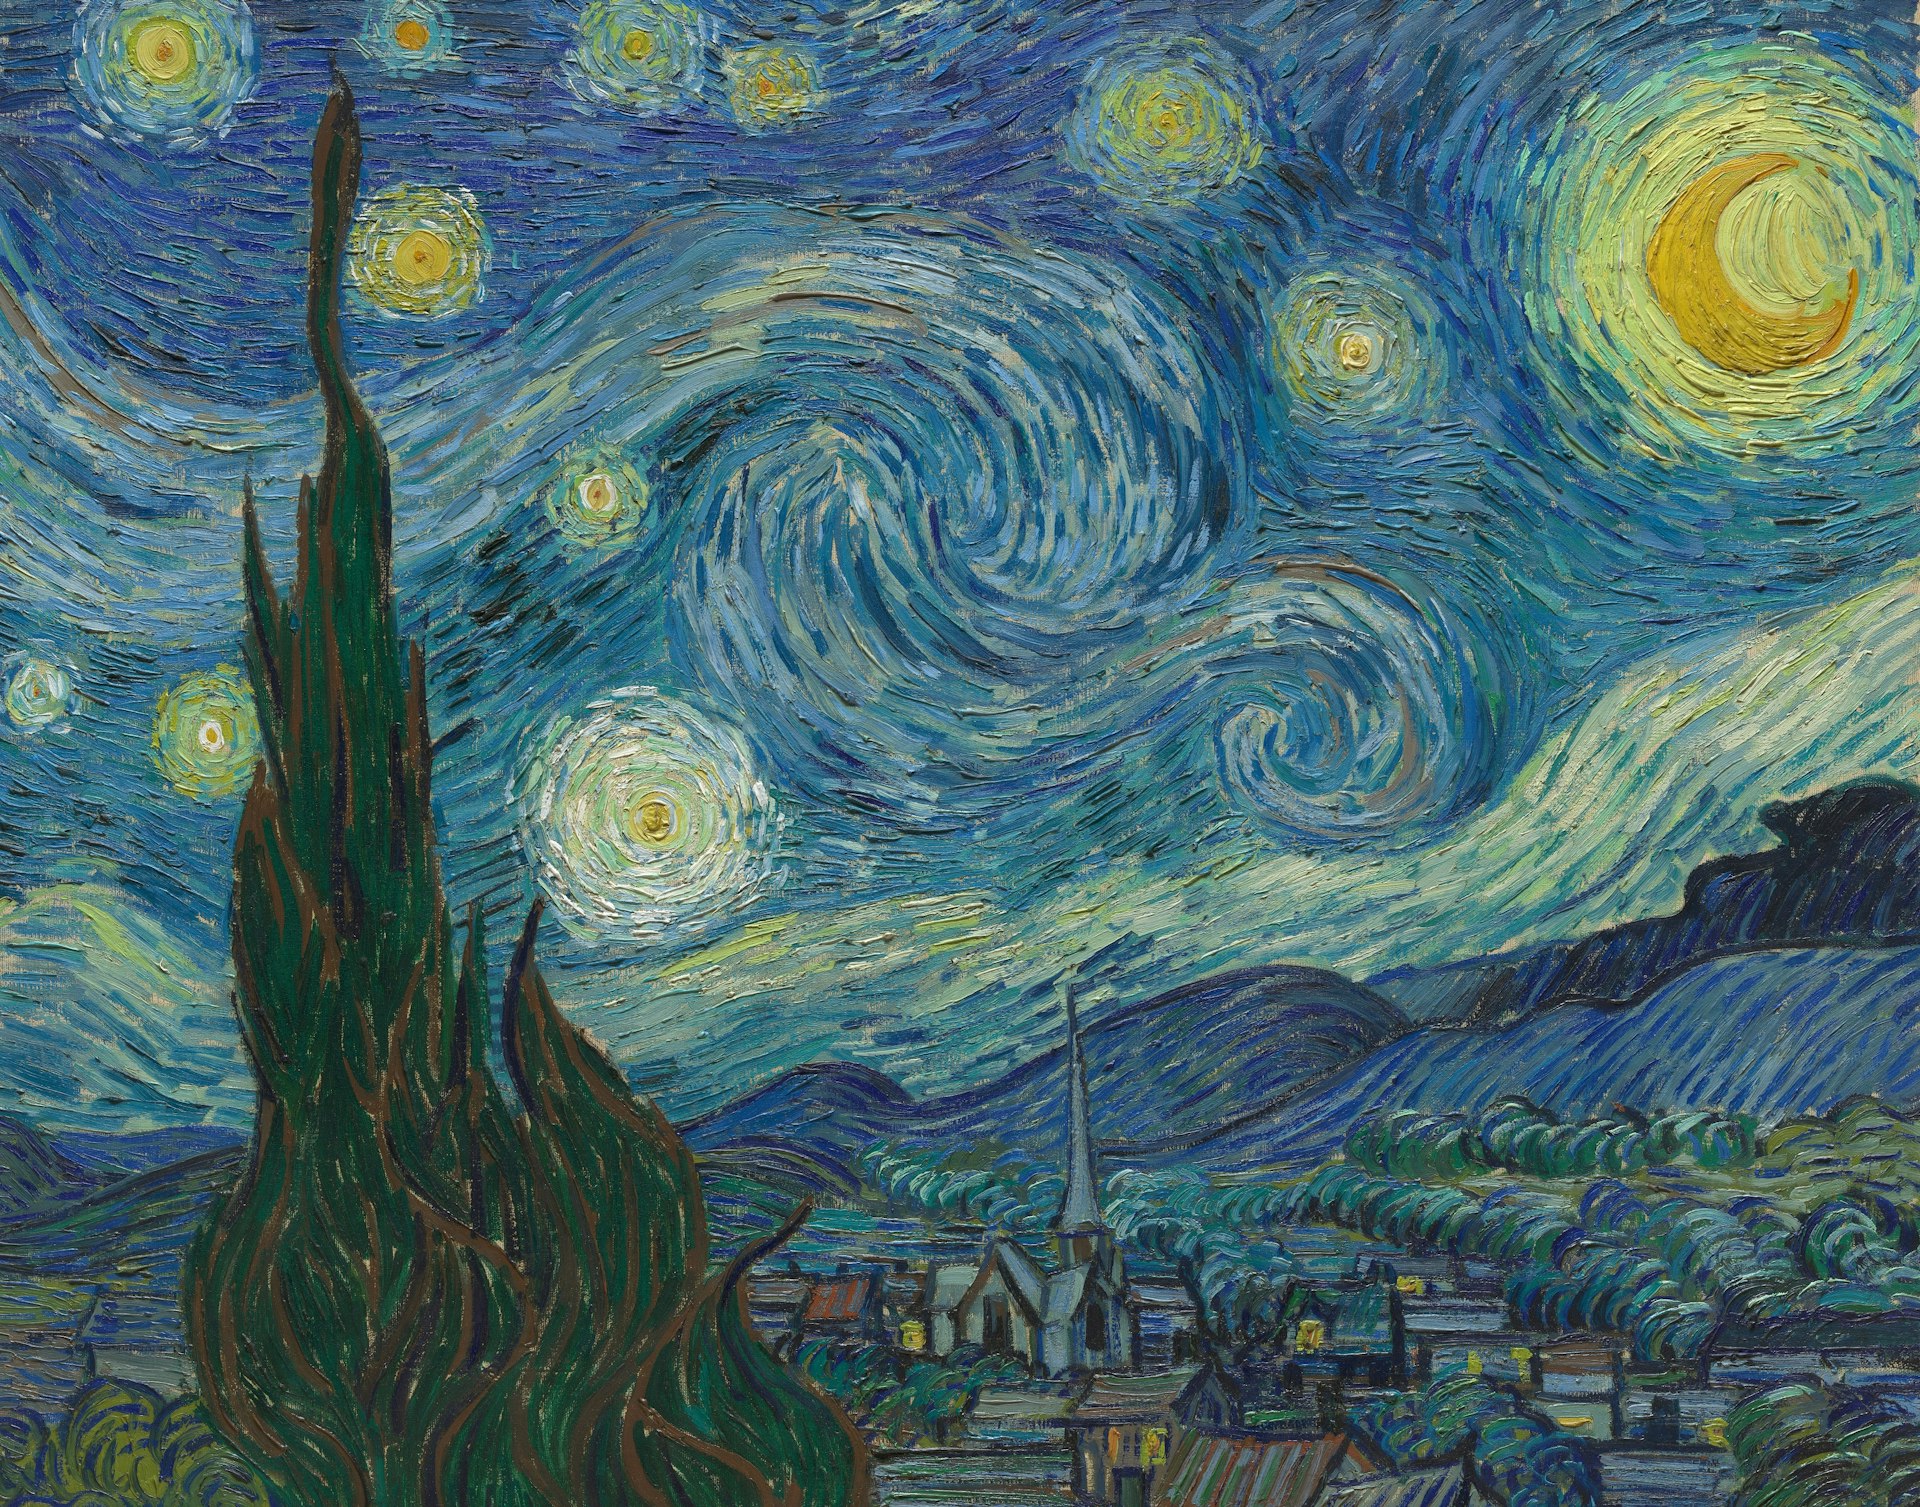 Van Gogh's The Starry Night